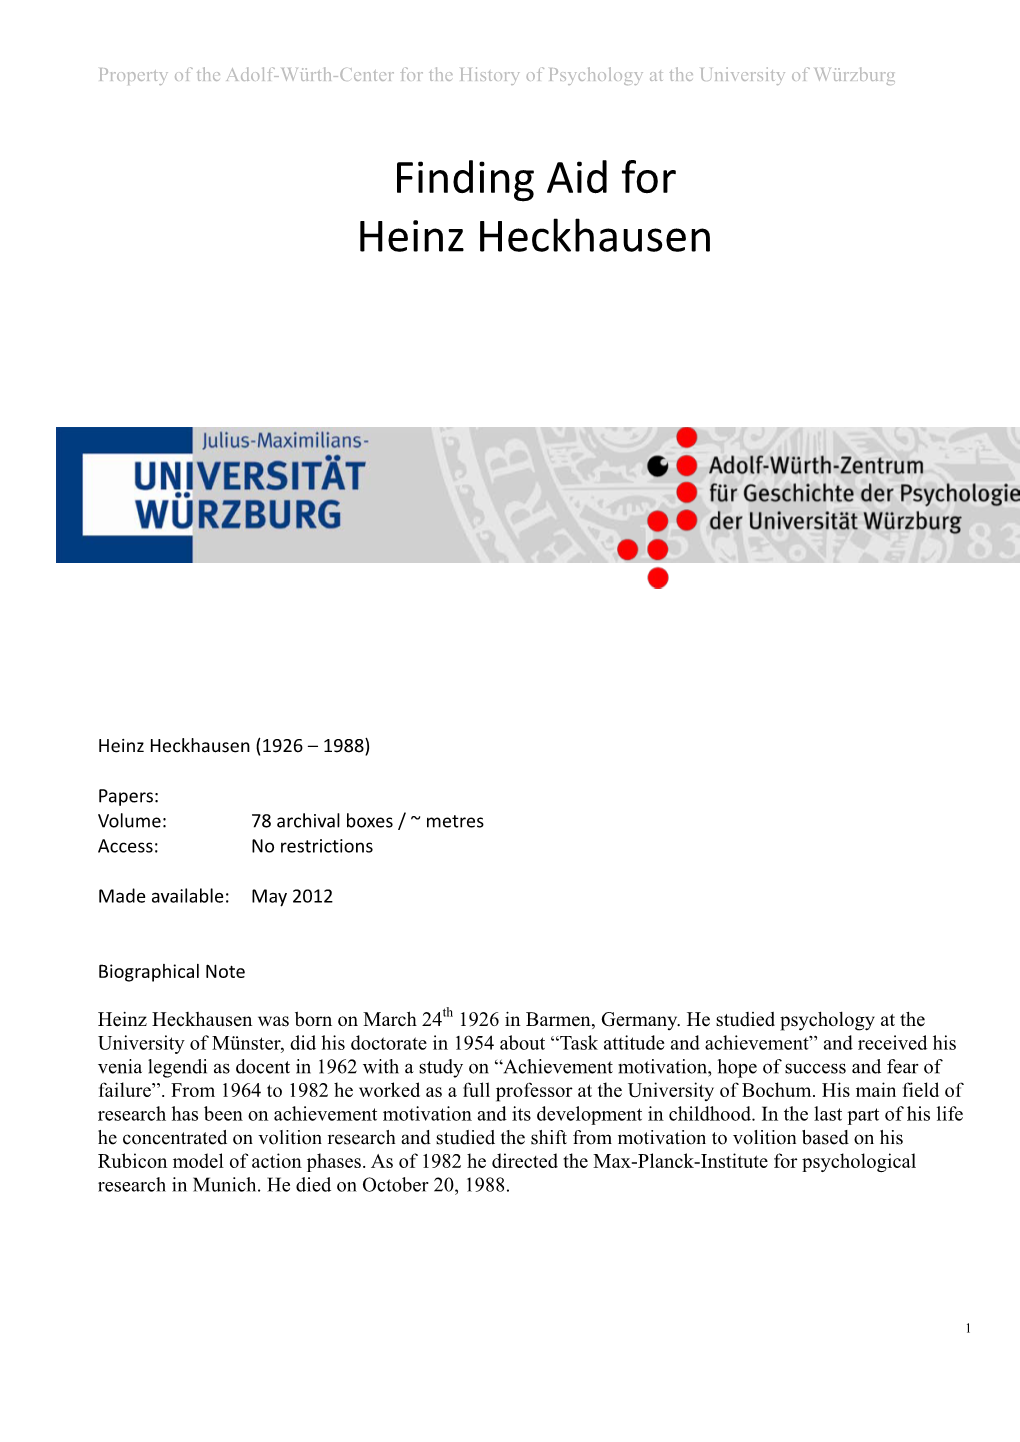 Finding Aid for Heinz Heckhausen